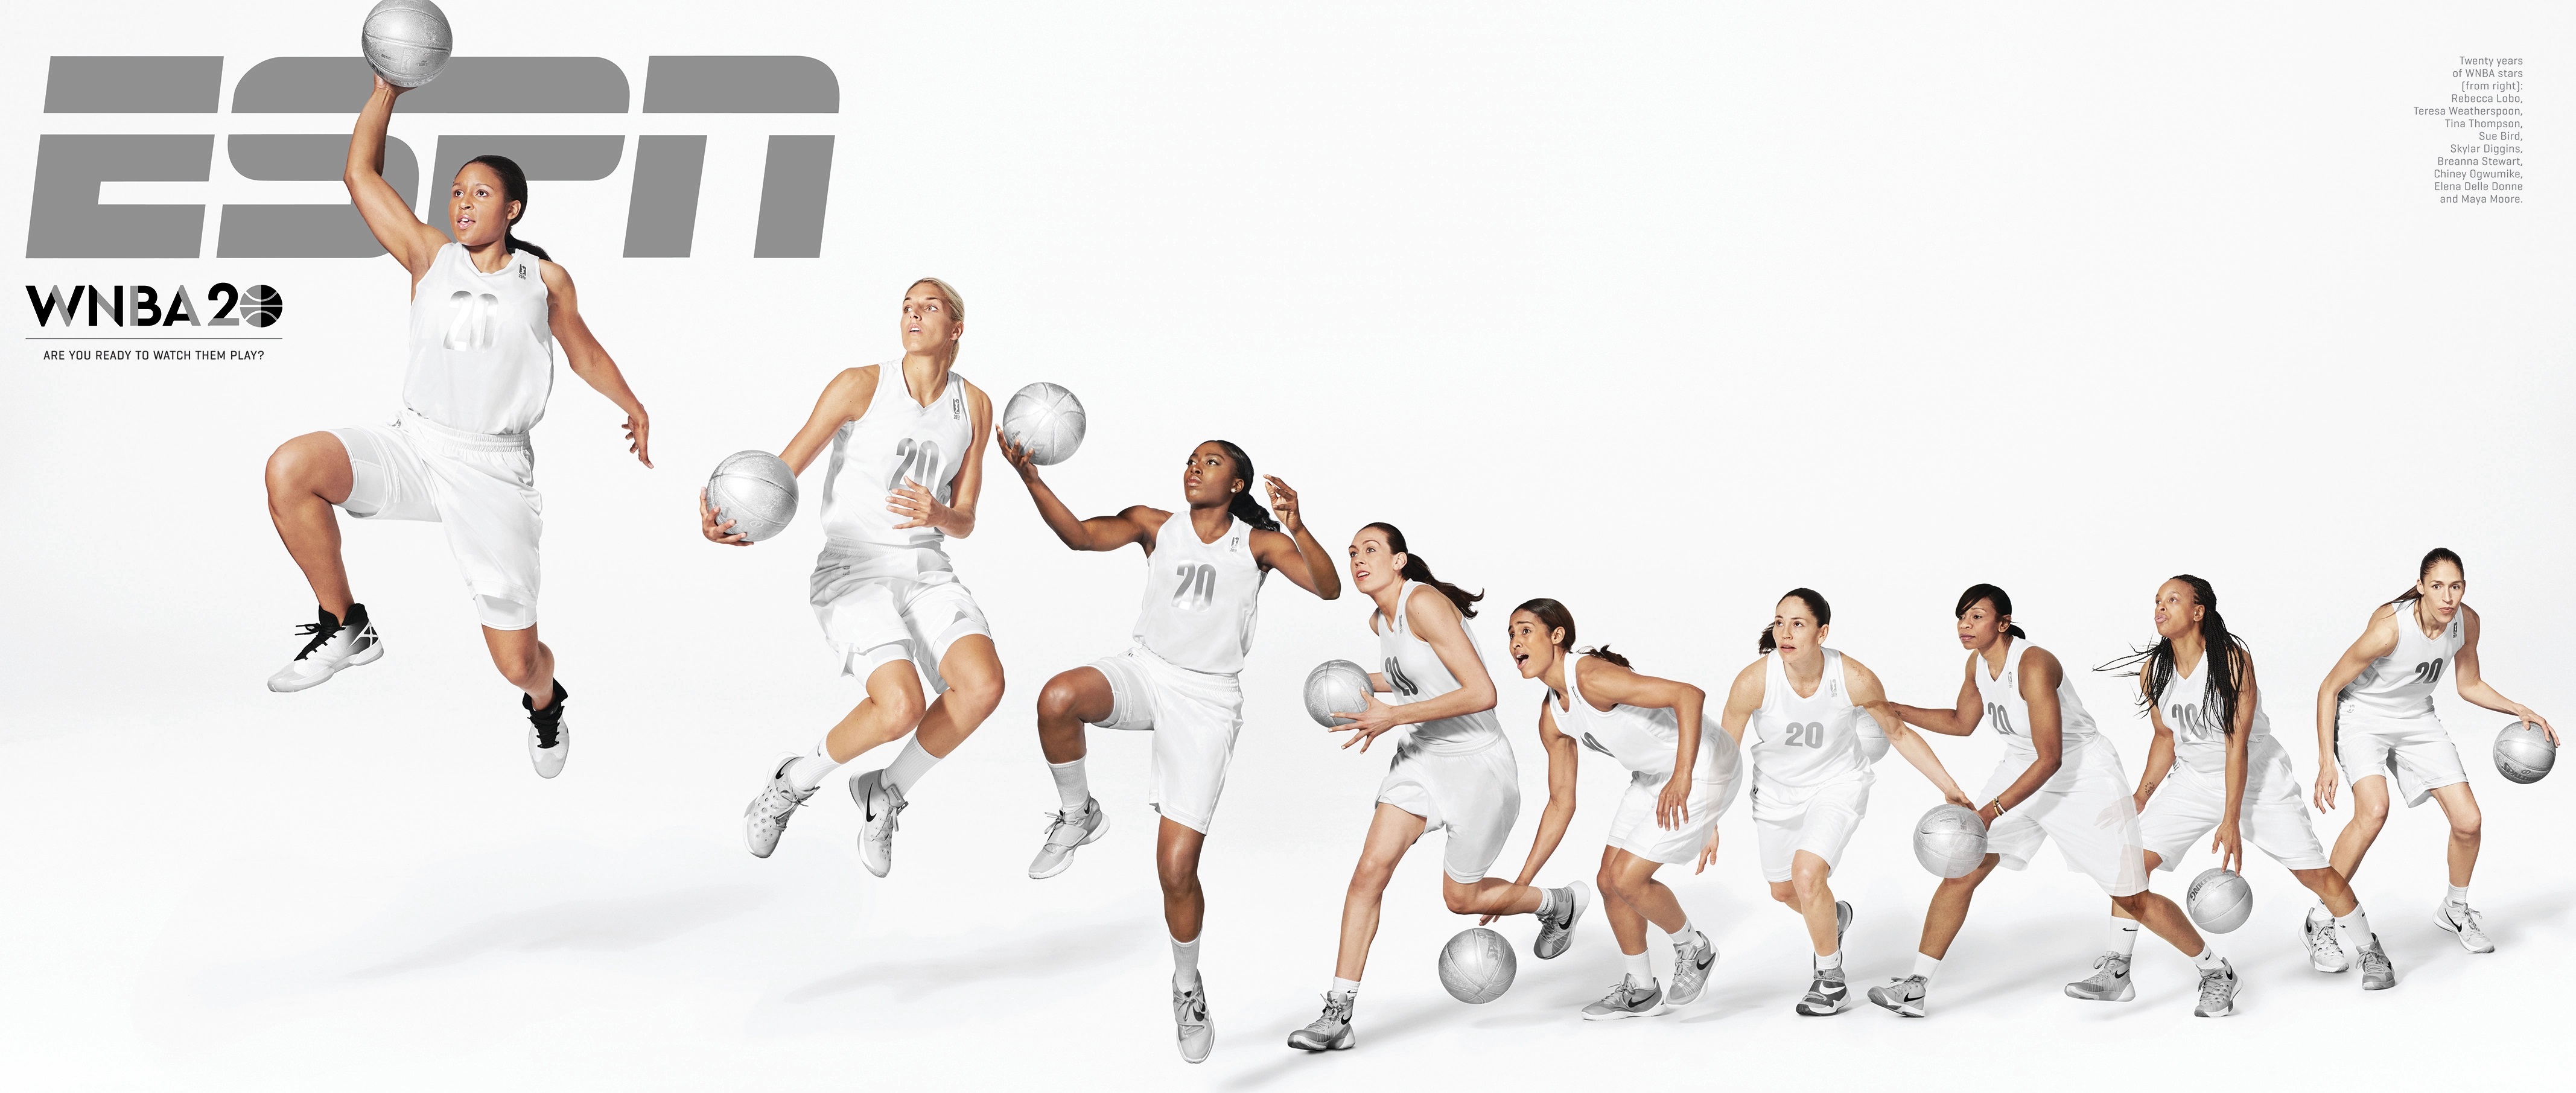 ESPN The Magazine - "WNBA 20th Anniversary," May 23